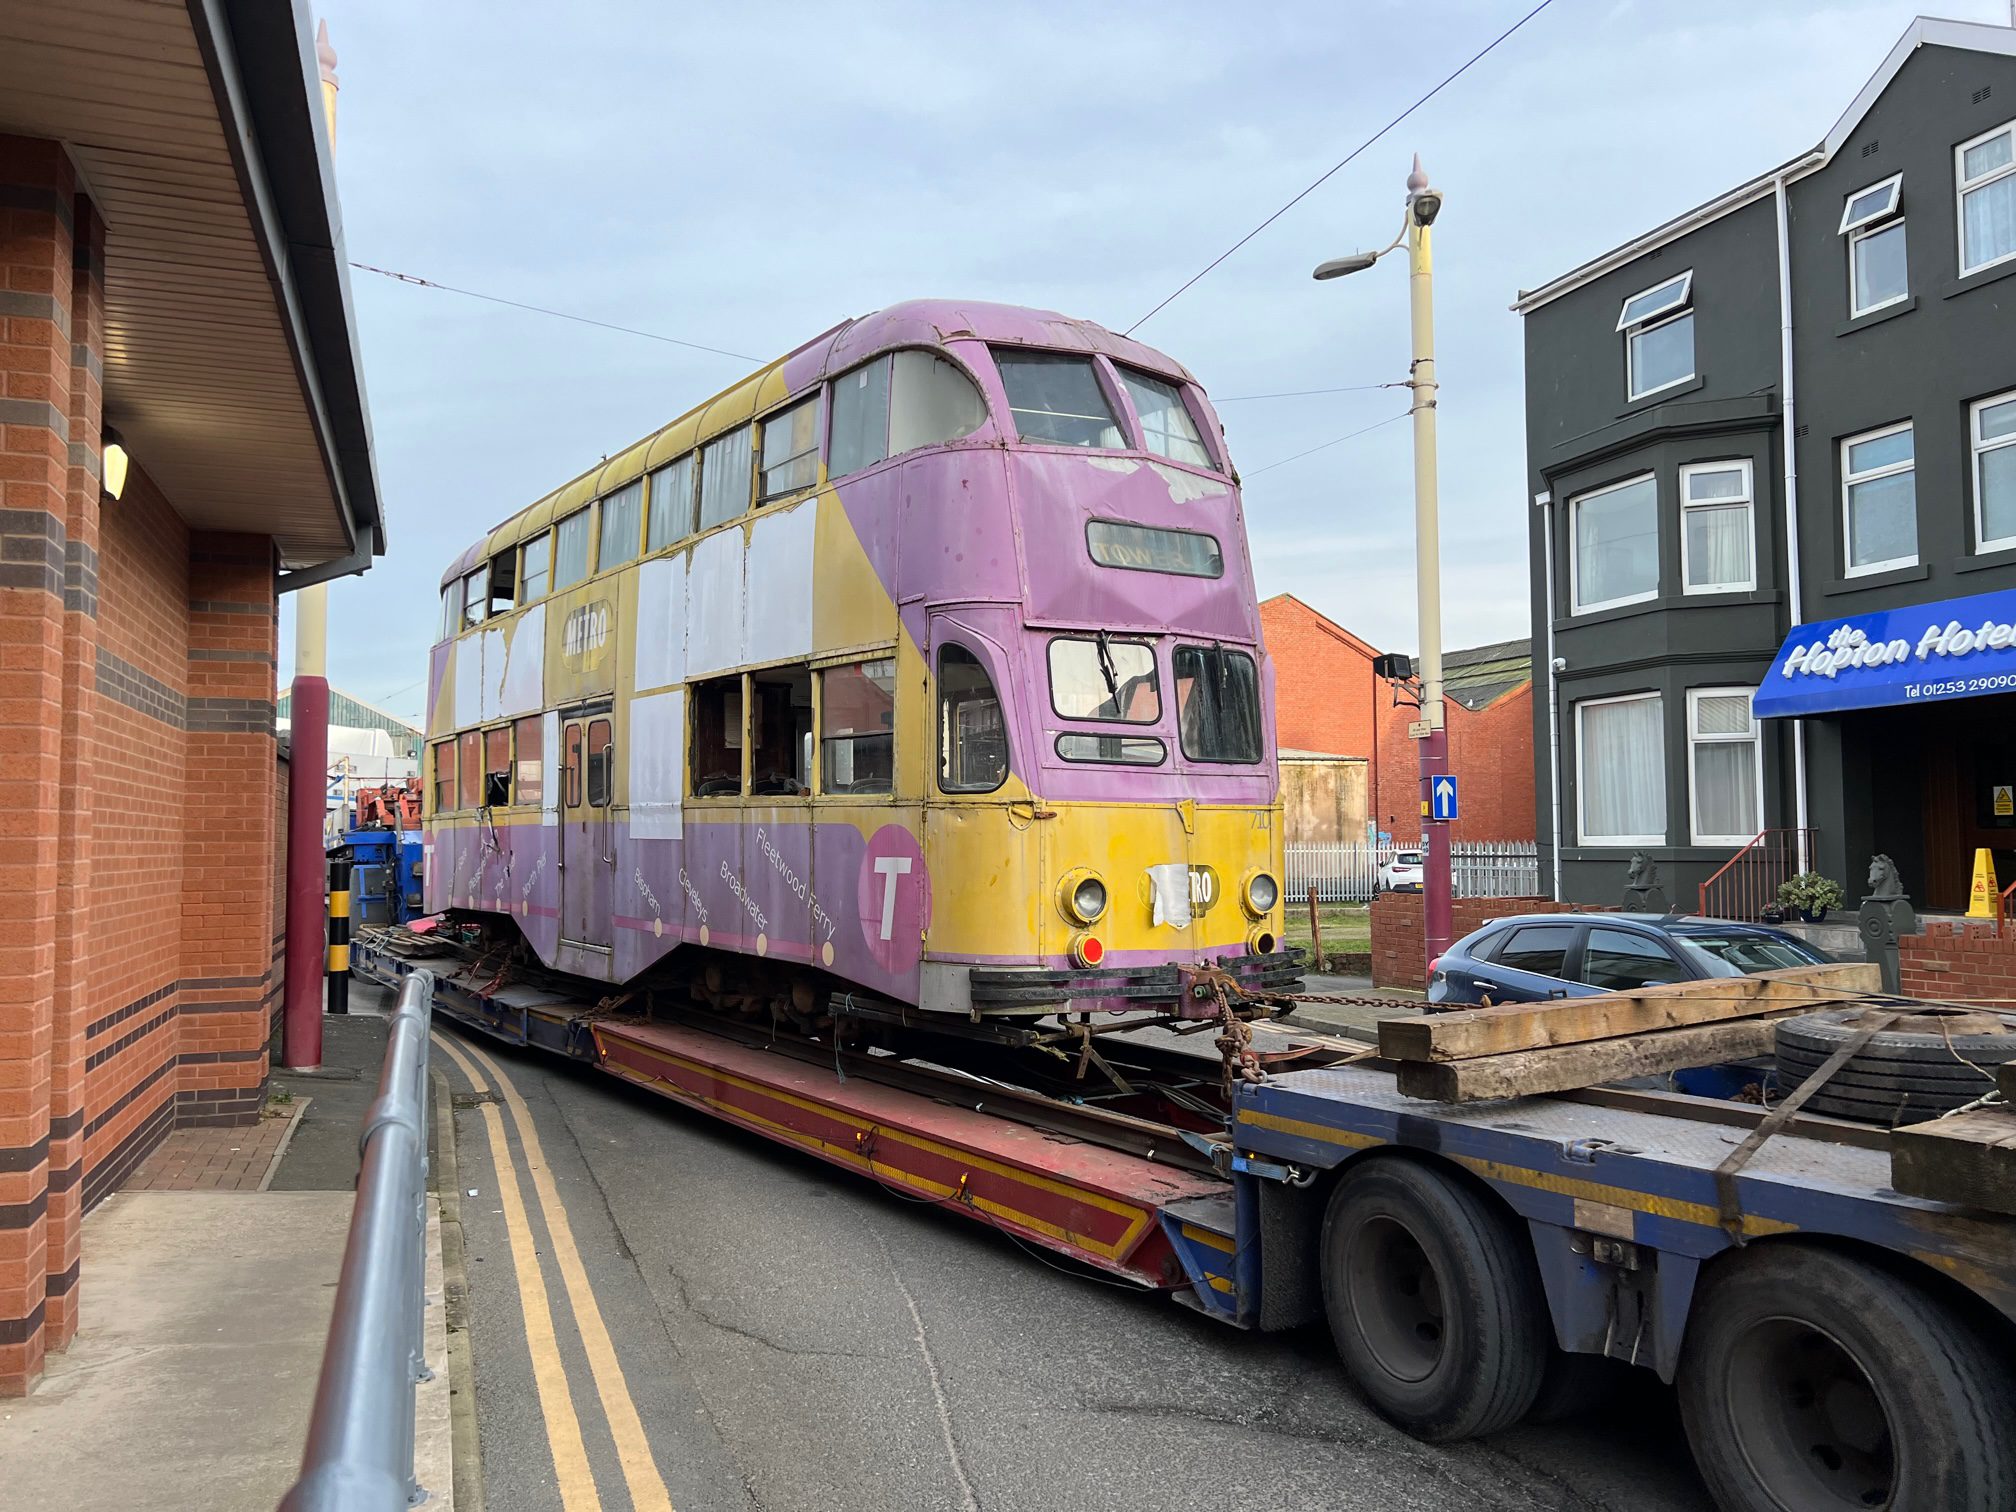 Coronation Street Tram - saved from the scrap yard!